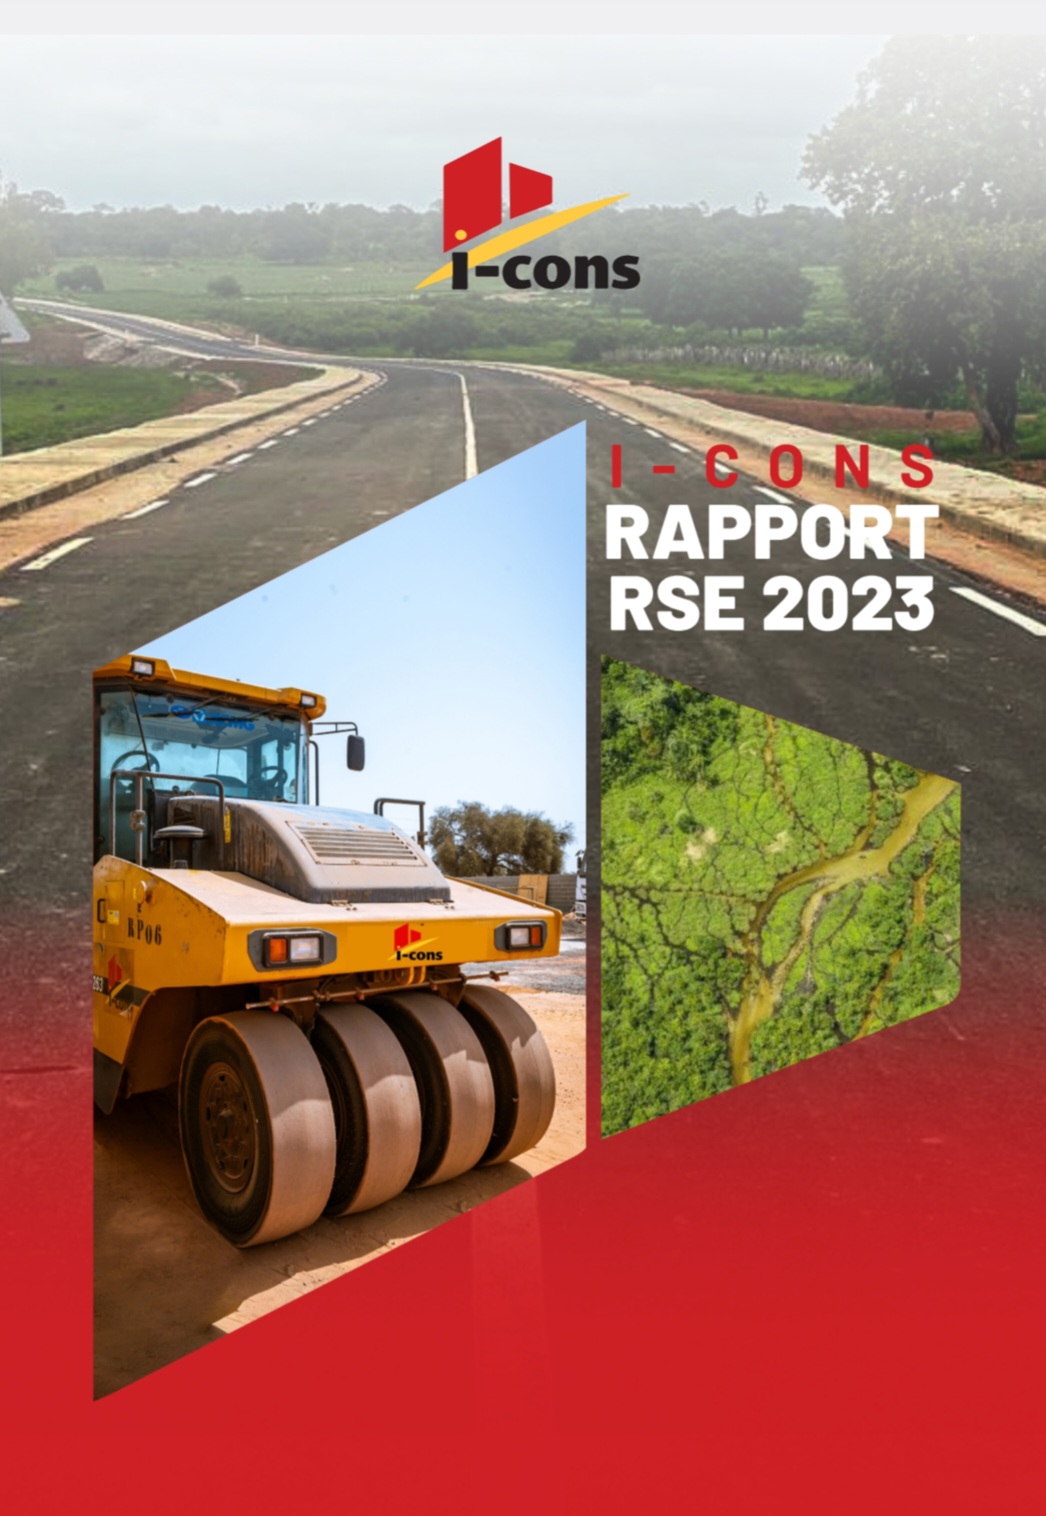 I-CONS RAPPORT RSE 2023